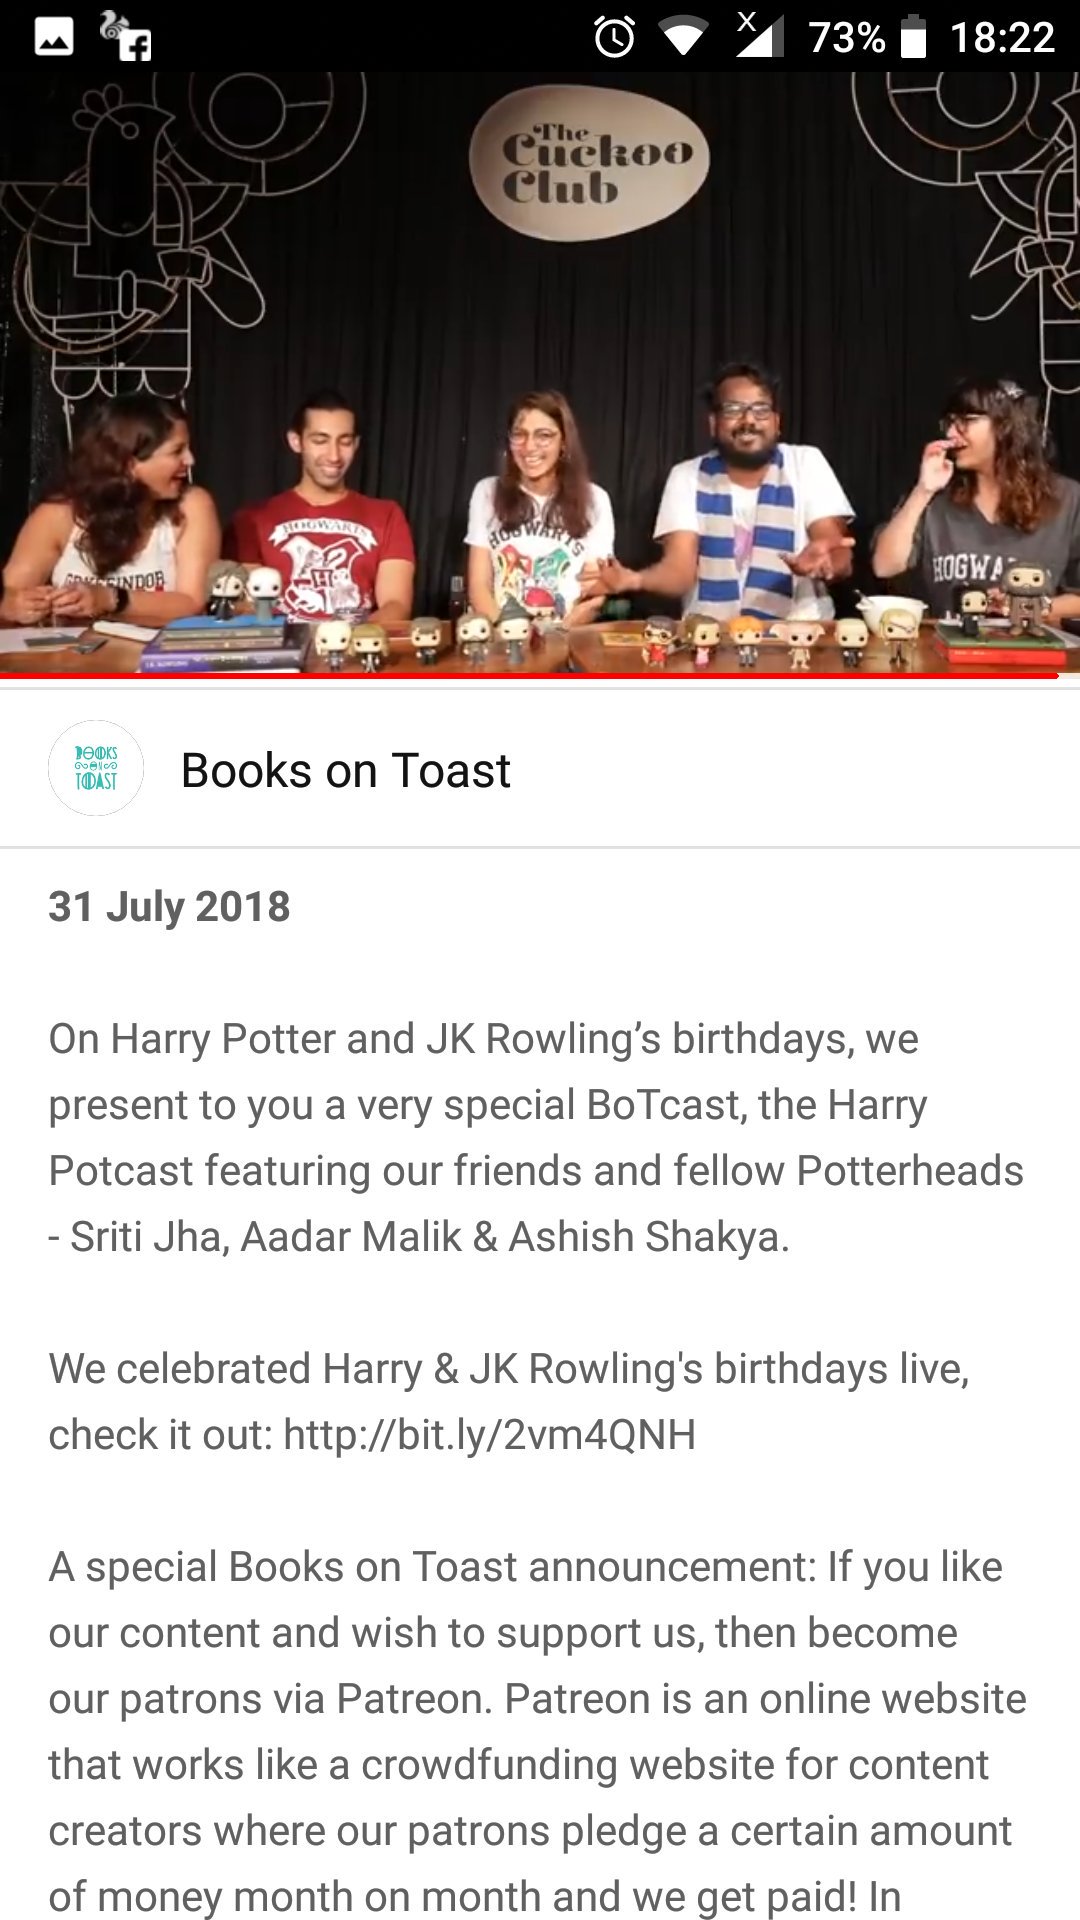  happy birthday Harry potter 